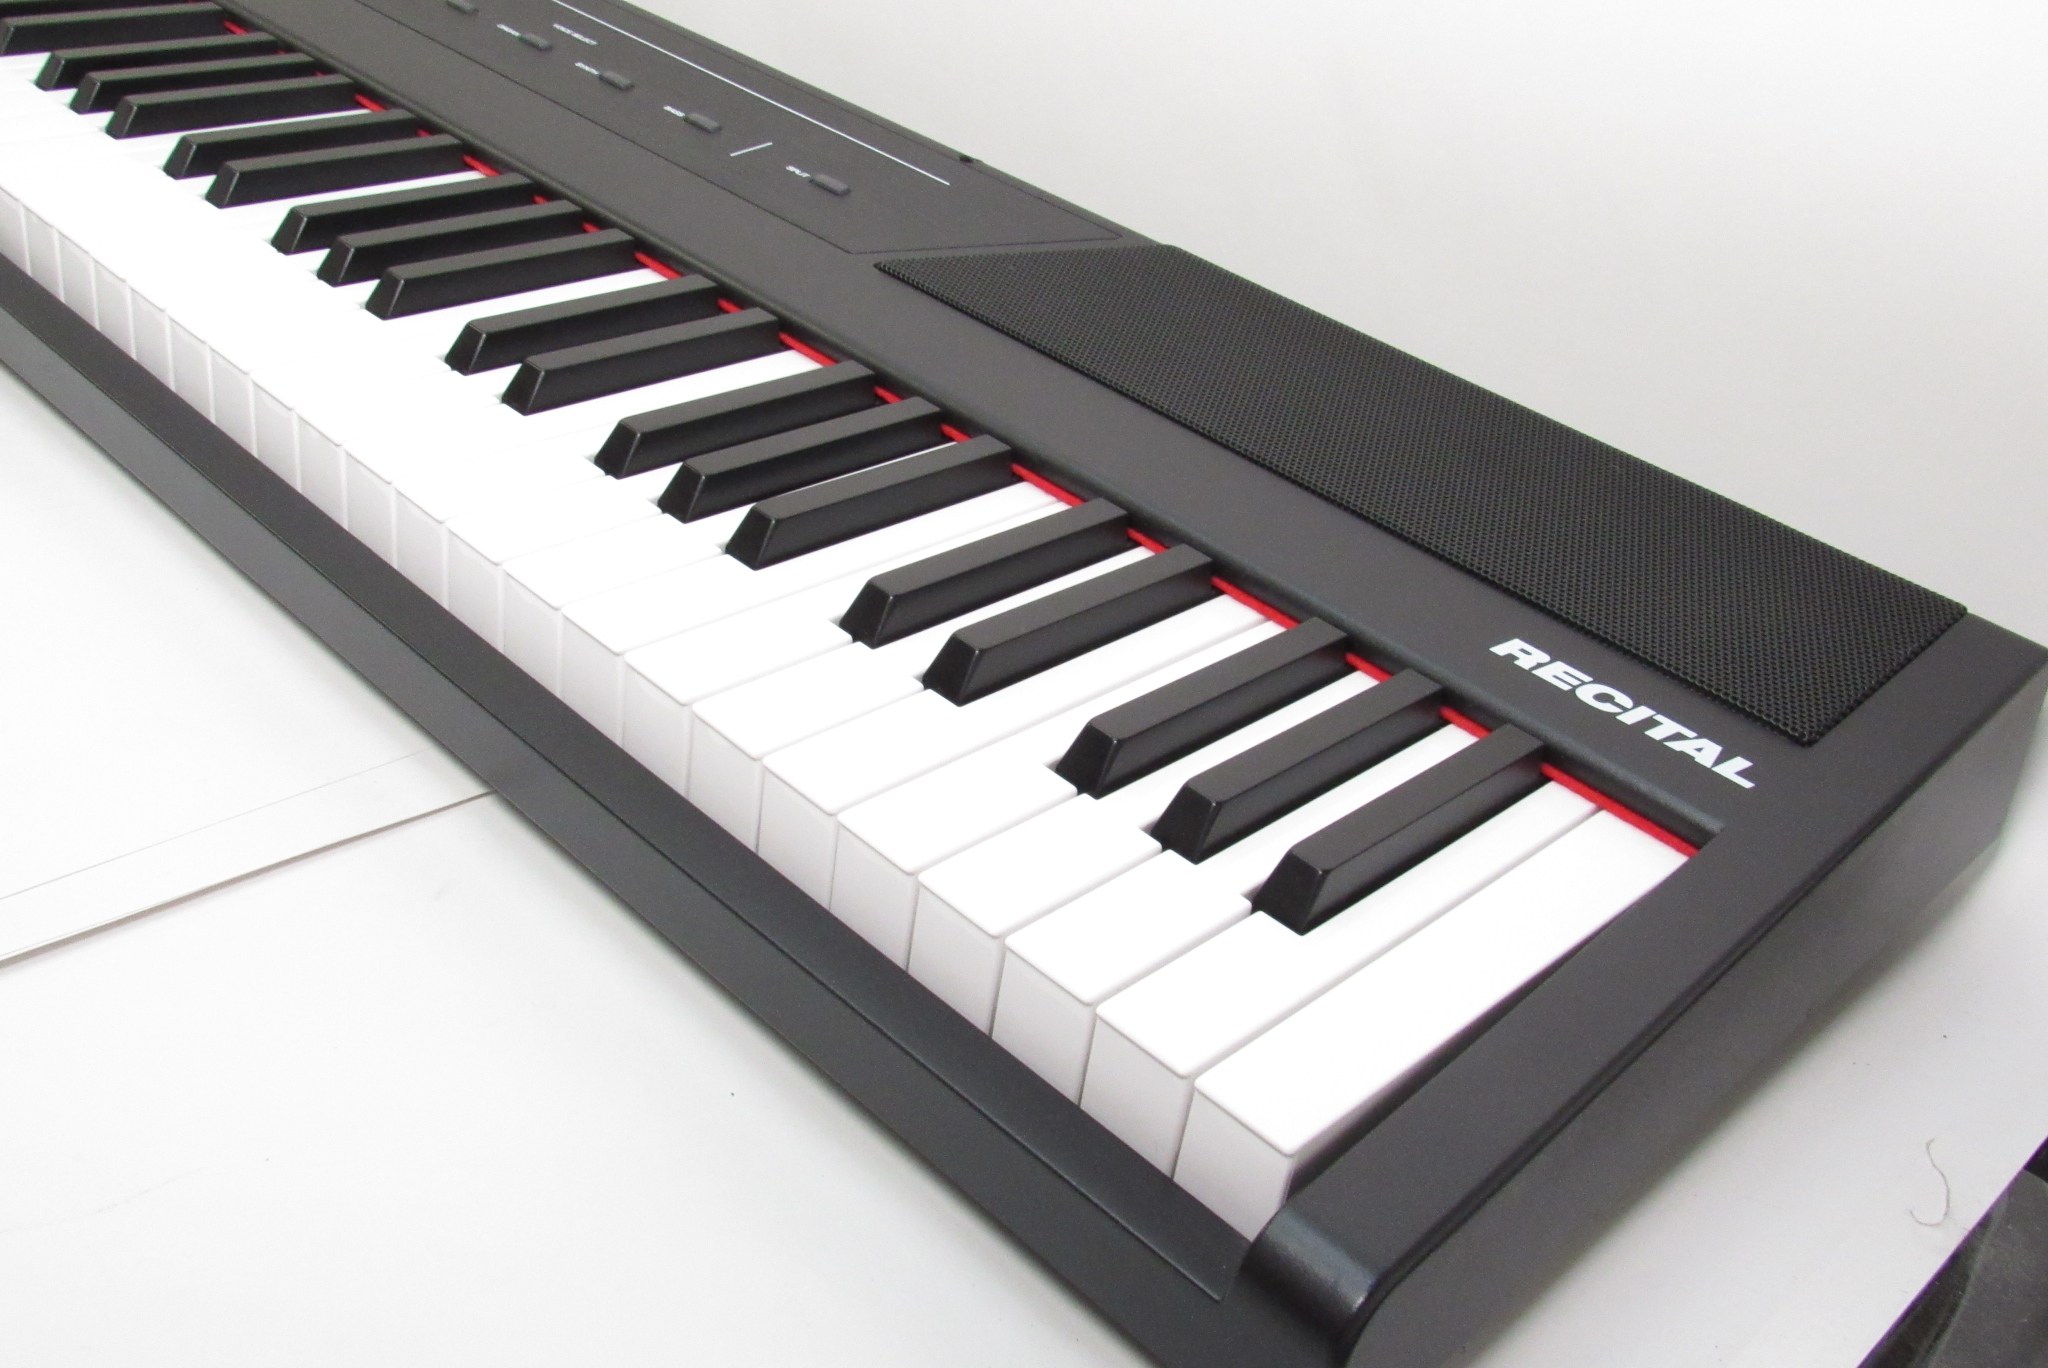 Alesis Recital 88-Key Digital Piano with Full-Sized Keys 